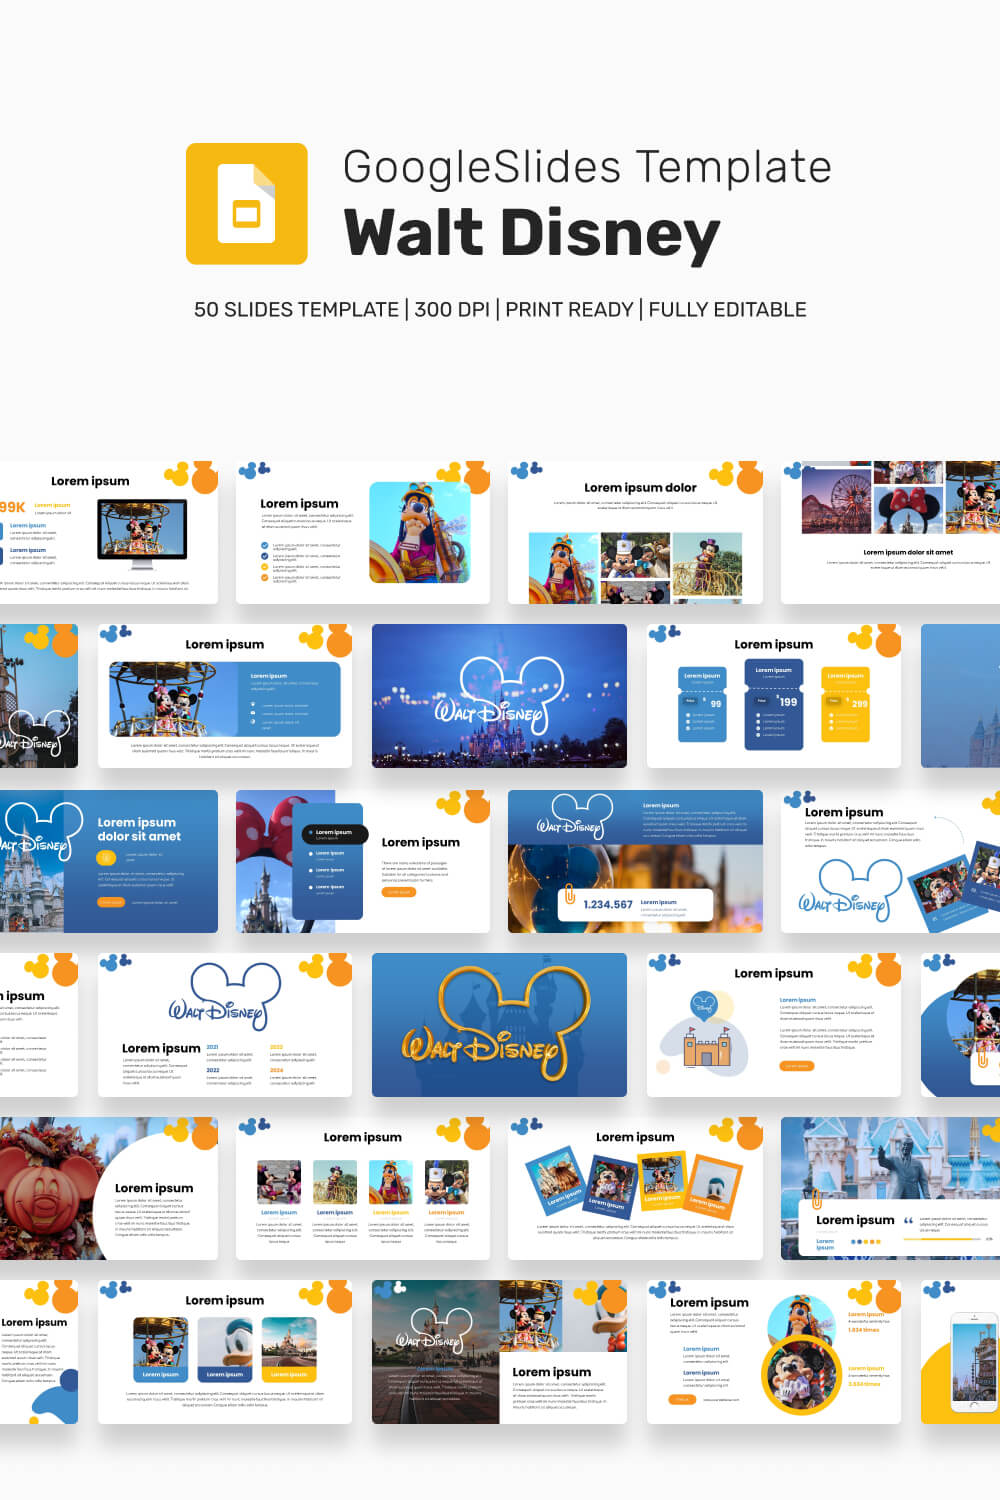 Walt Disney Google Slides Theme Previews pinterest image.